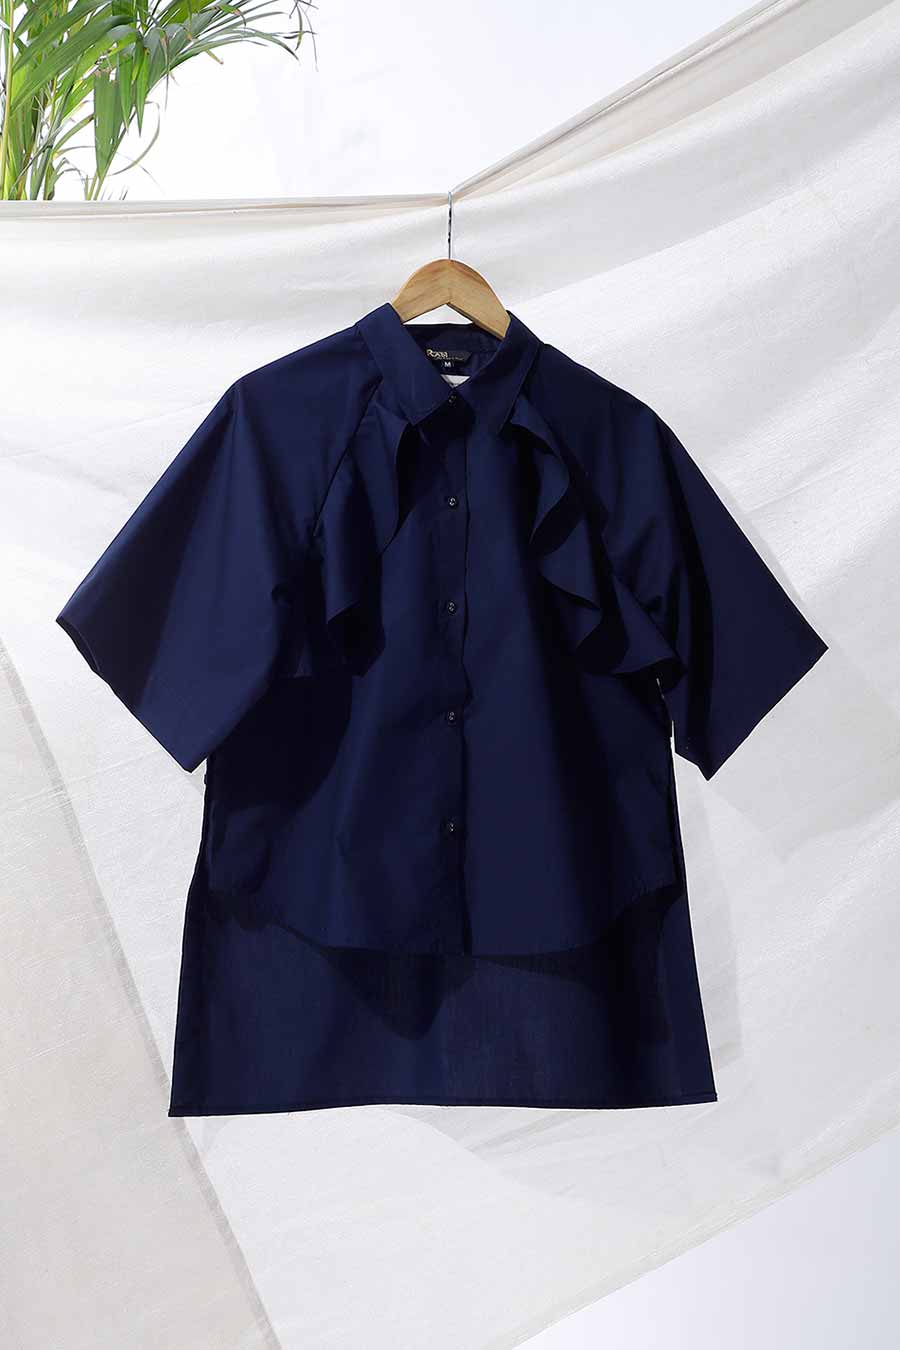 Navy Blue Ruffle High-Low Shirt